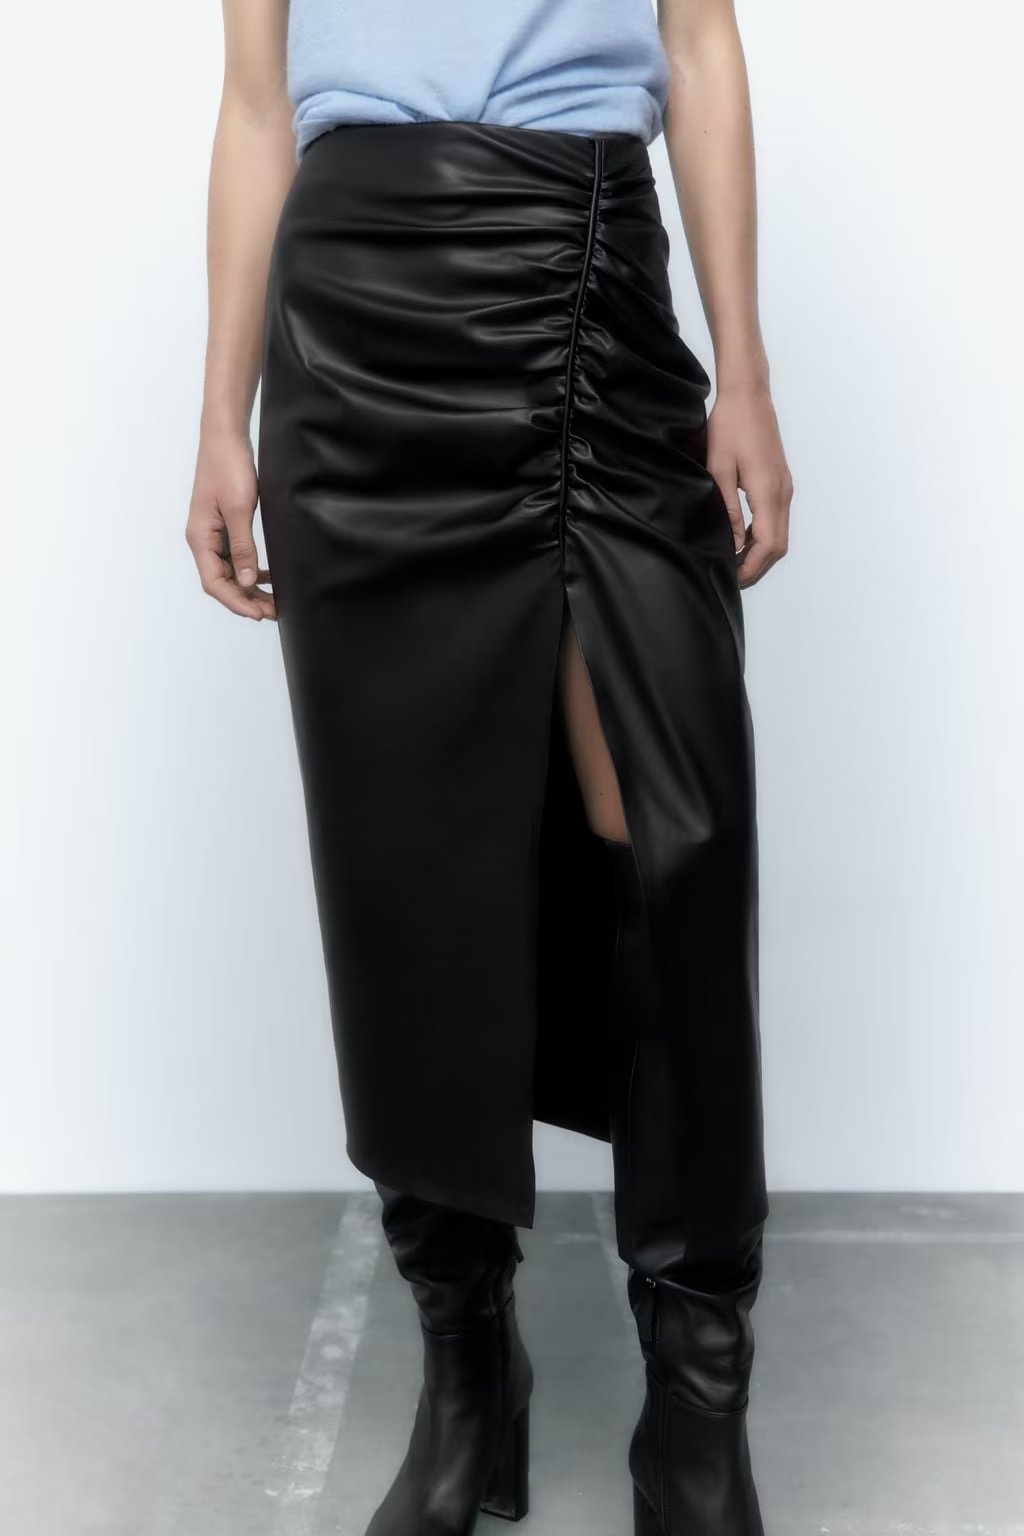 Minority Pleated Leather Open Front Skirt